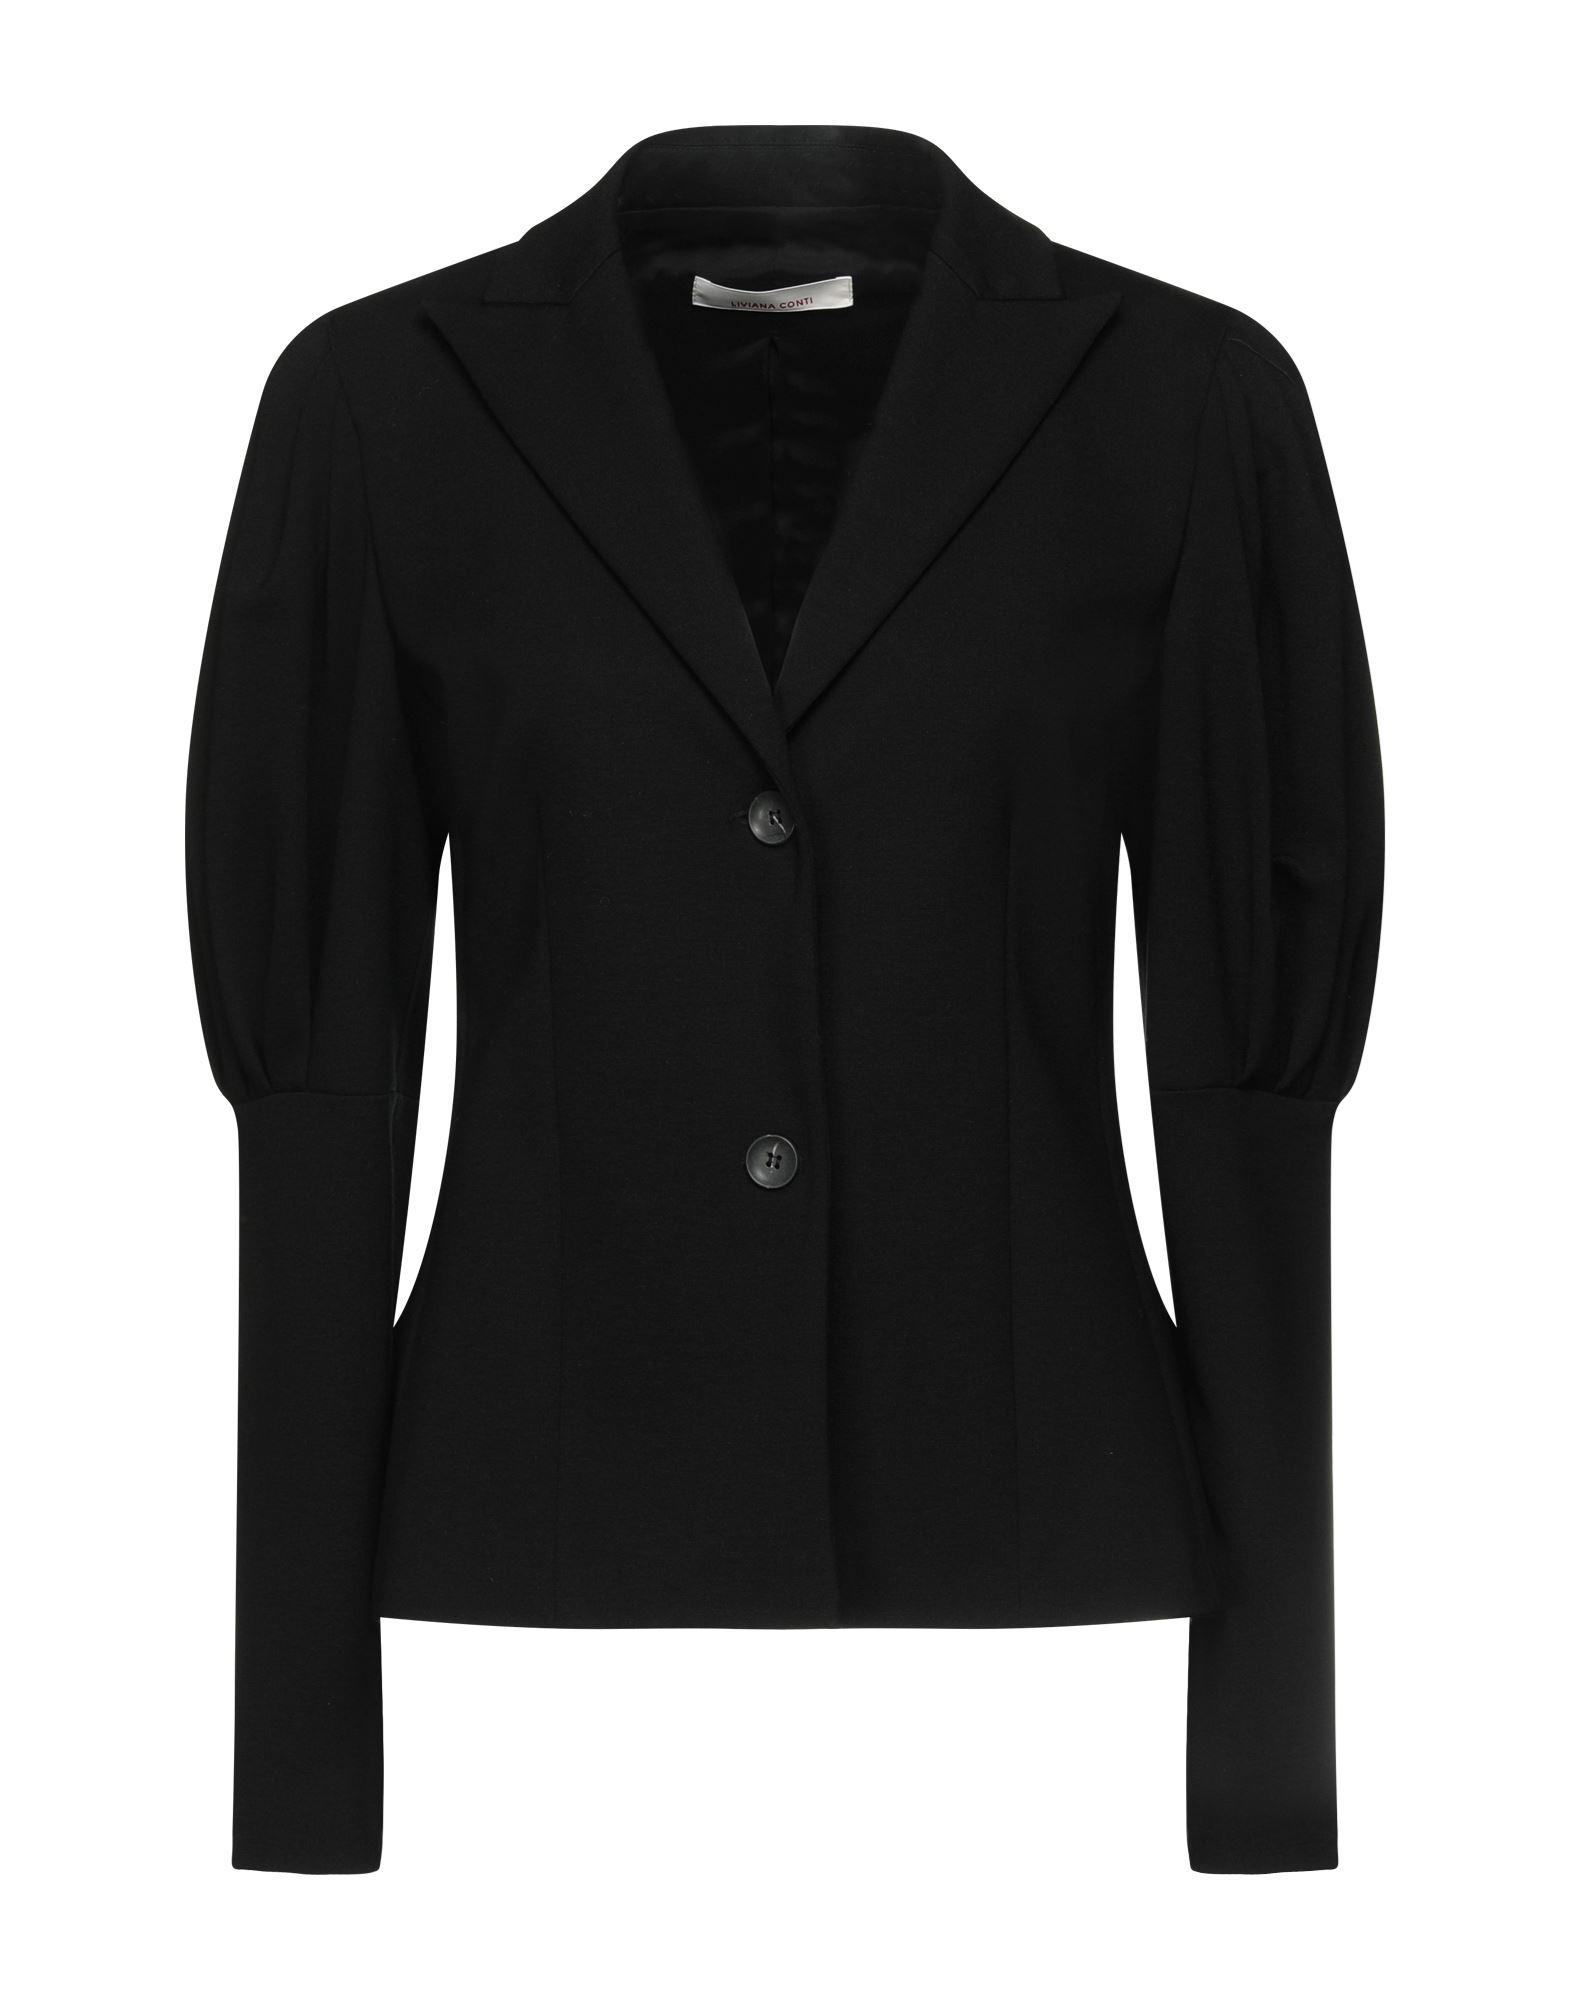 Liviana Conti Suit Jackets In Black